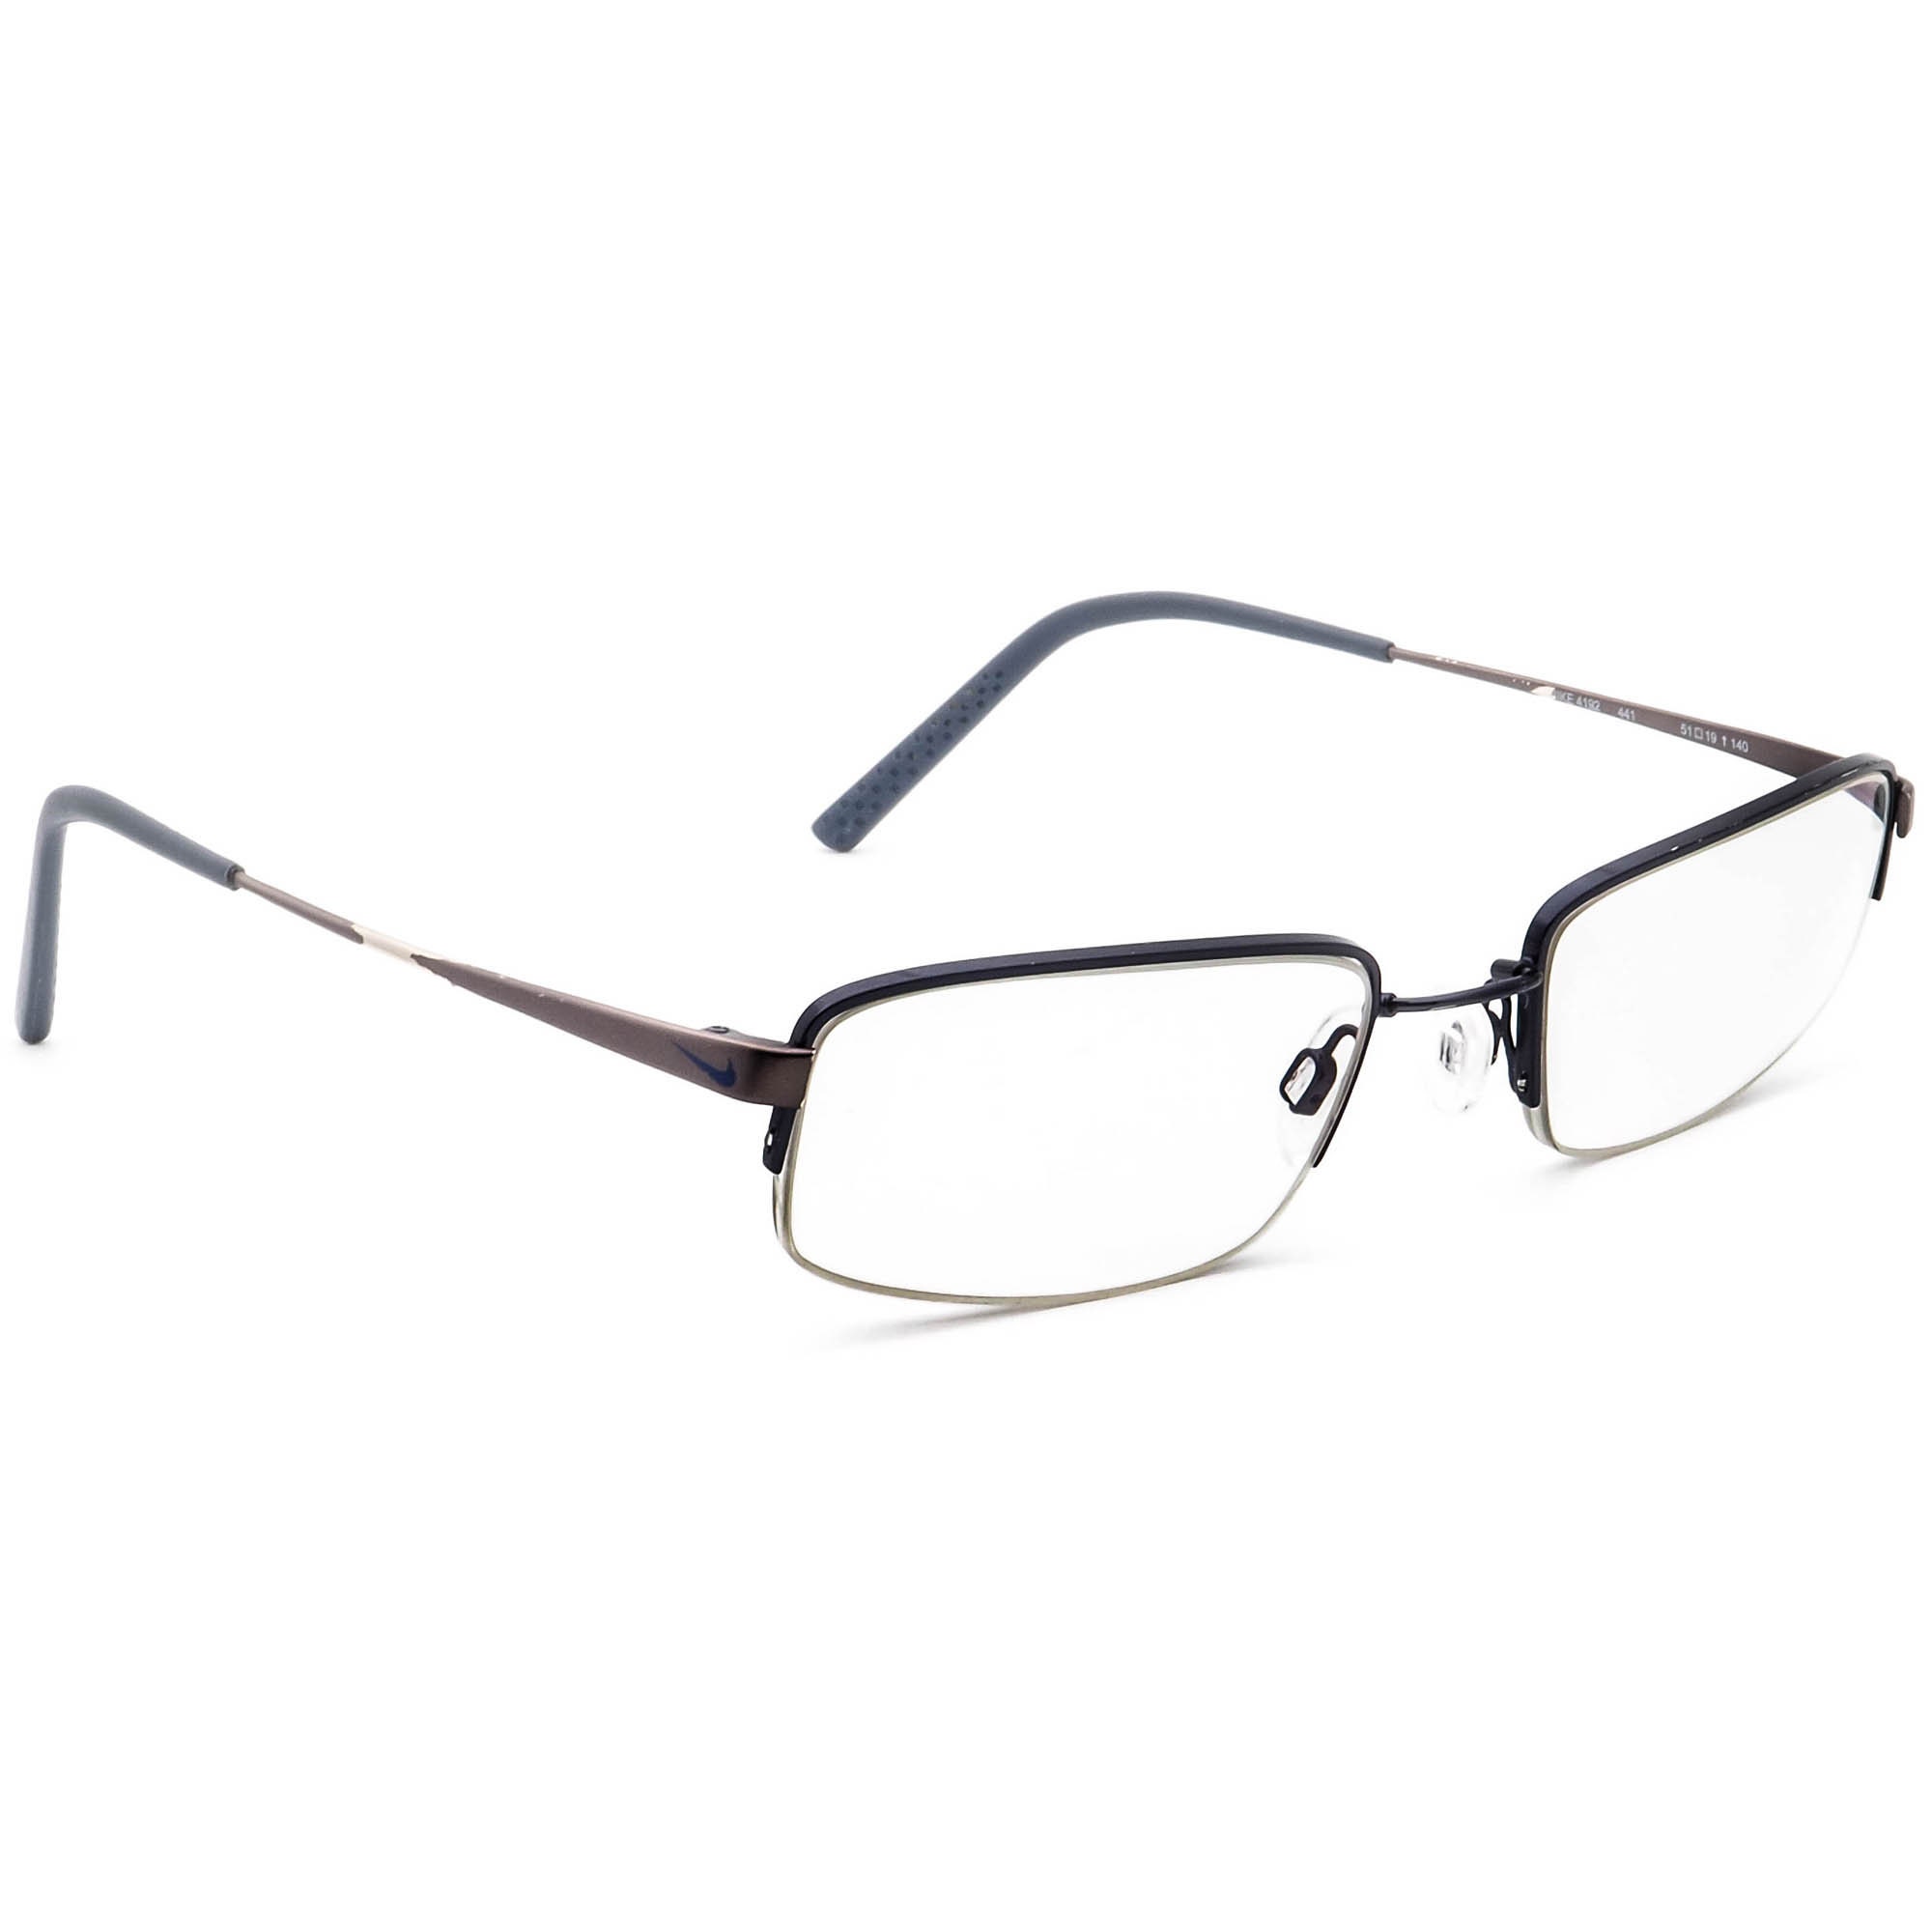 Eyeglasses 4192 441 Flexon Blue Half Rim Metal Frame -